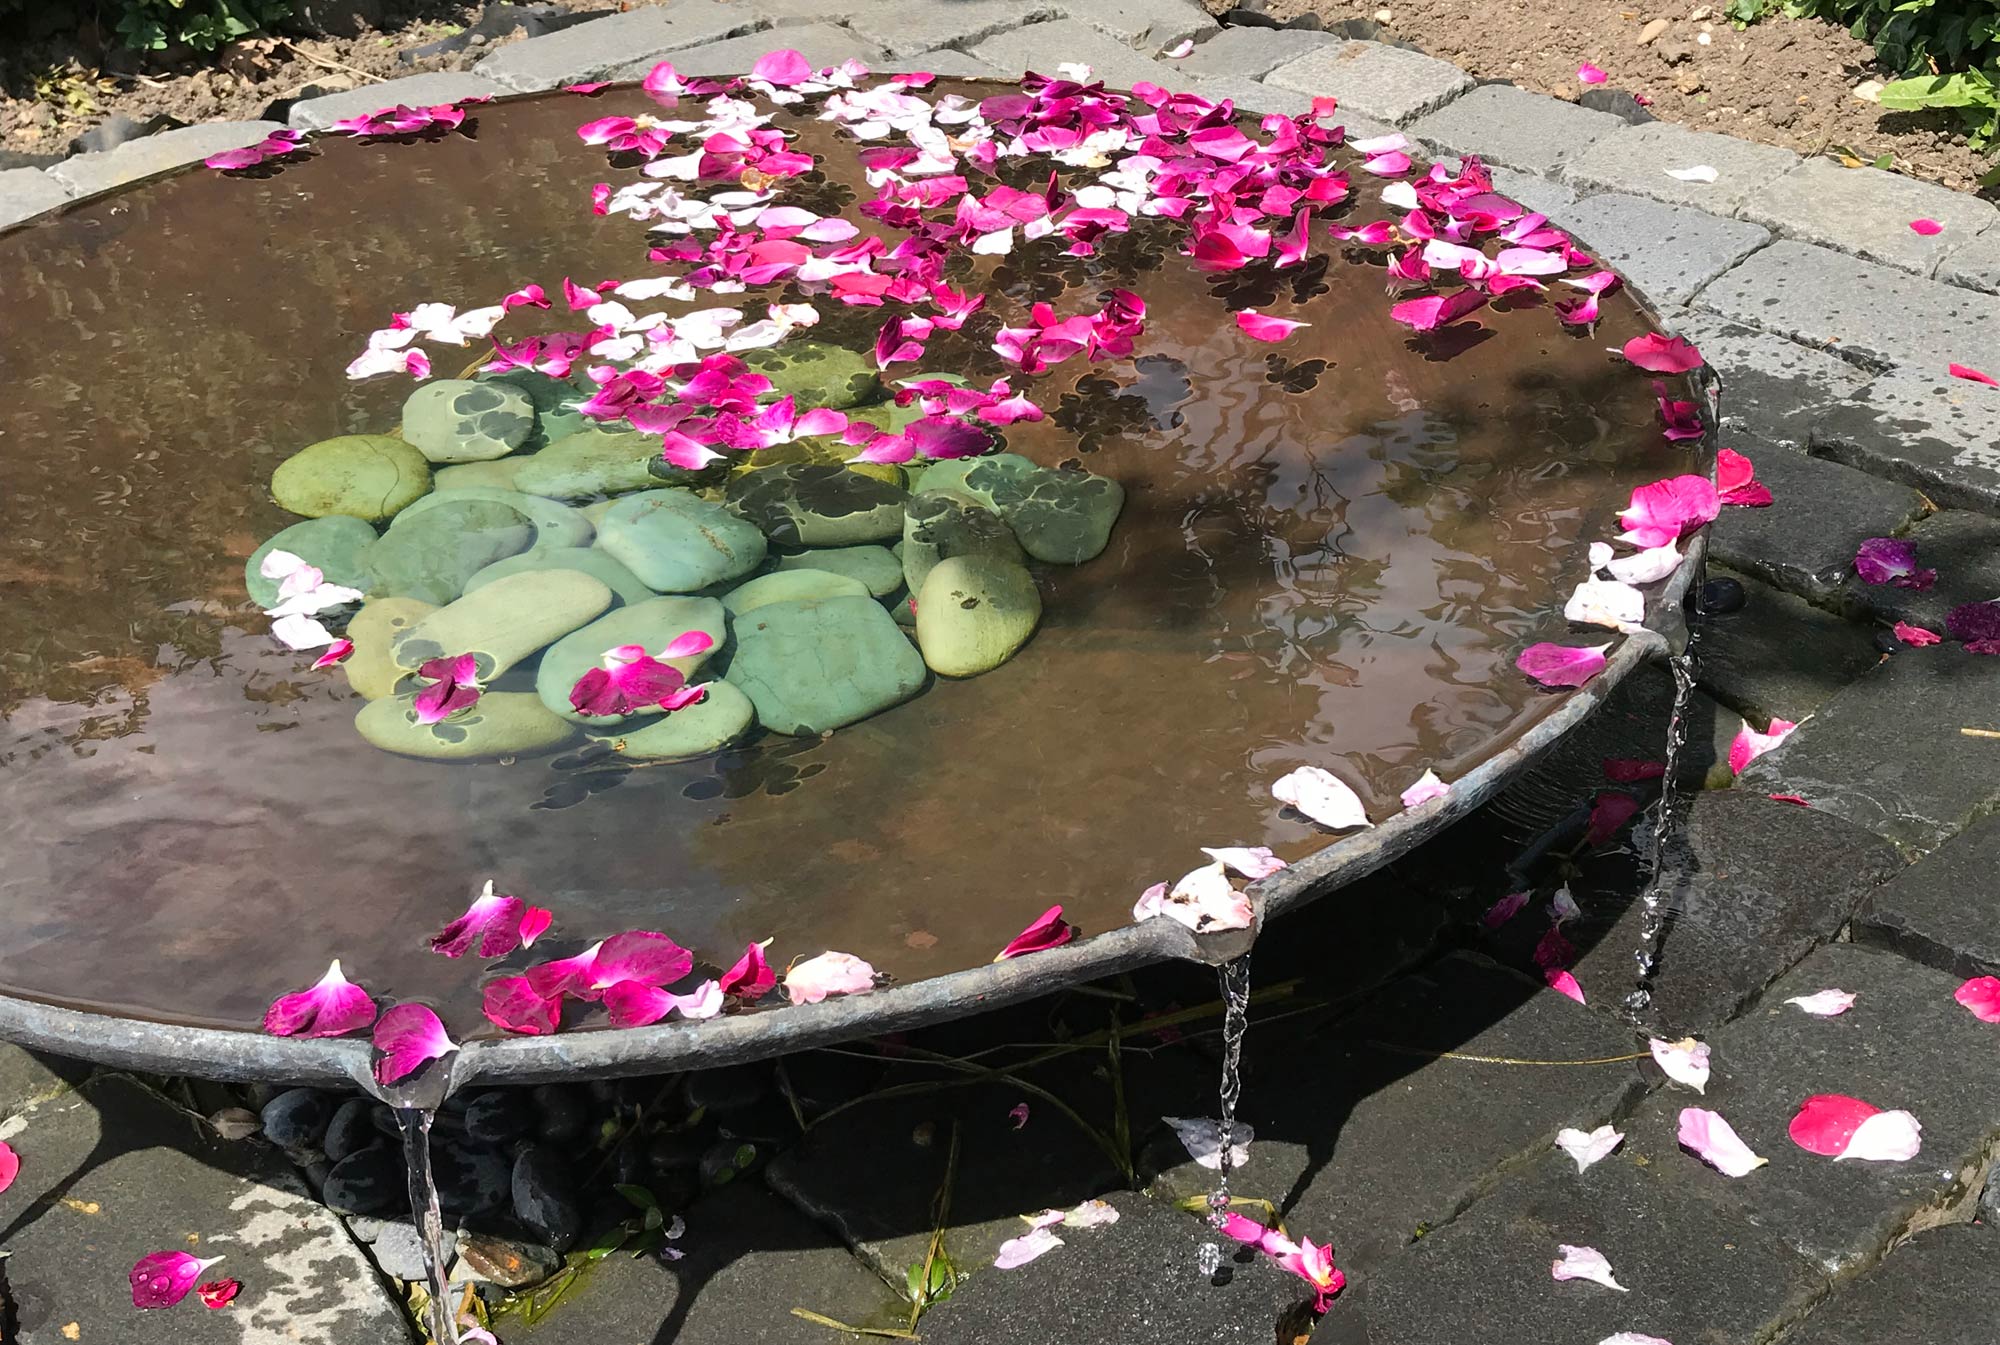 Como water feature with rose petals - Peter Esutance Symphonic Gardens